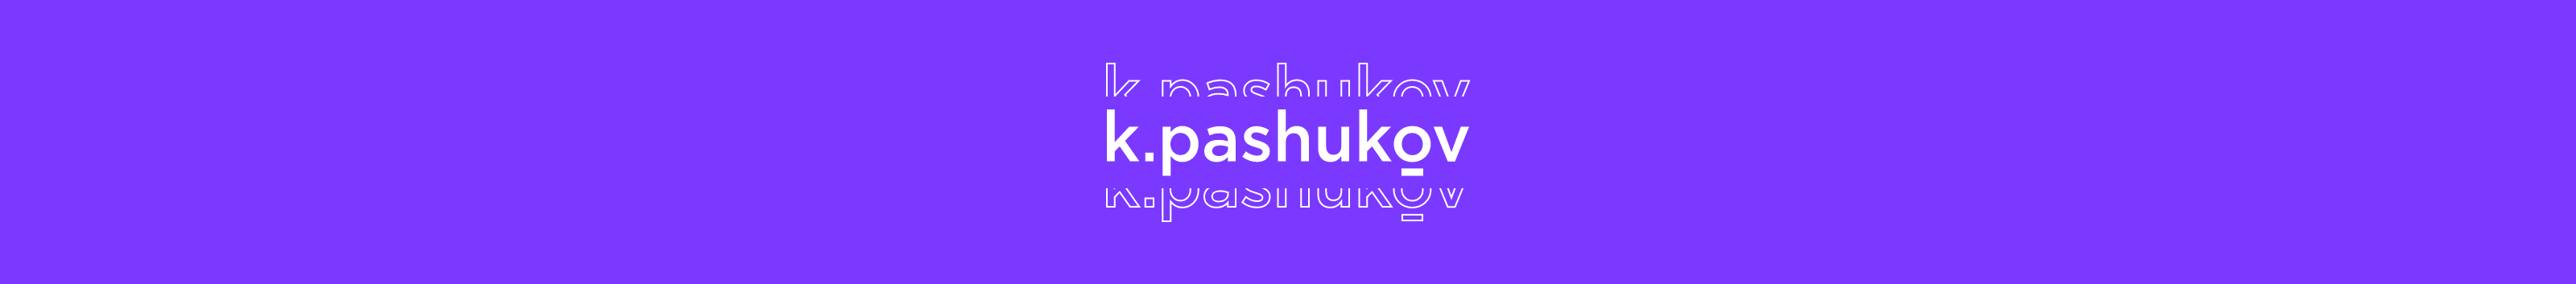 Kirill Pashukov ✪'s profile banner